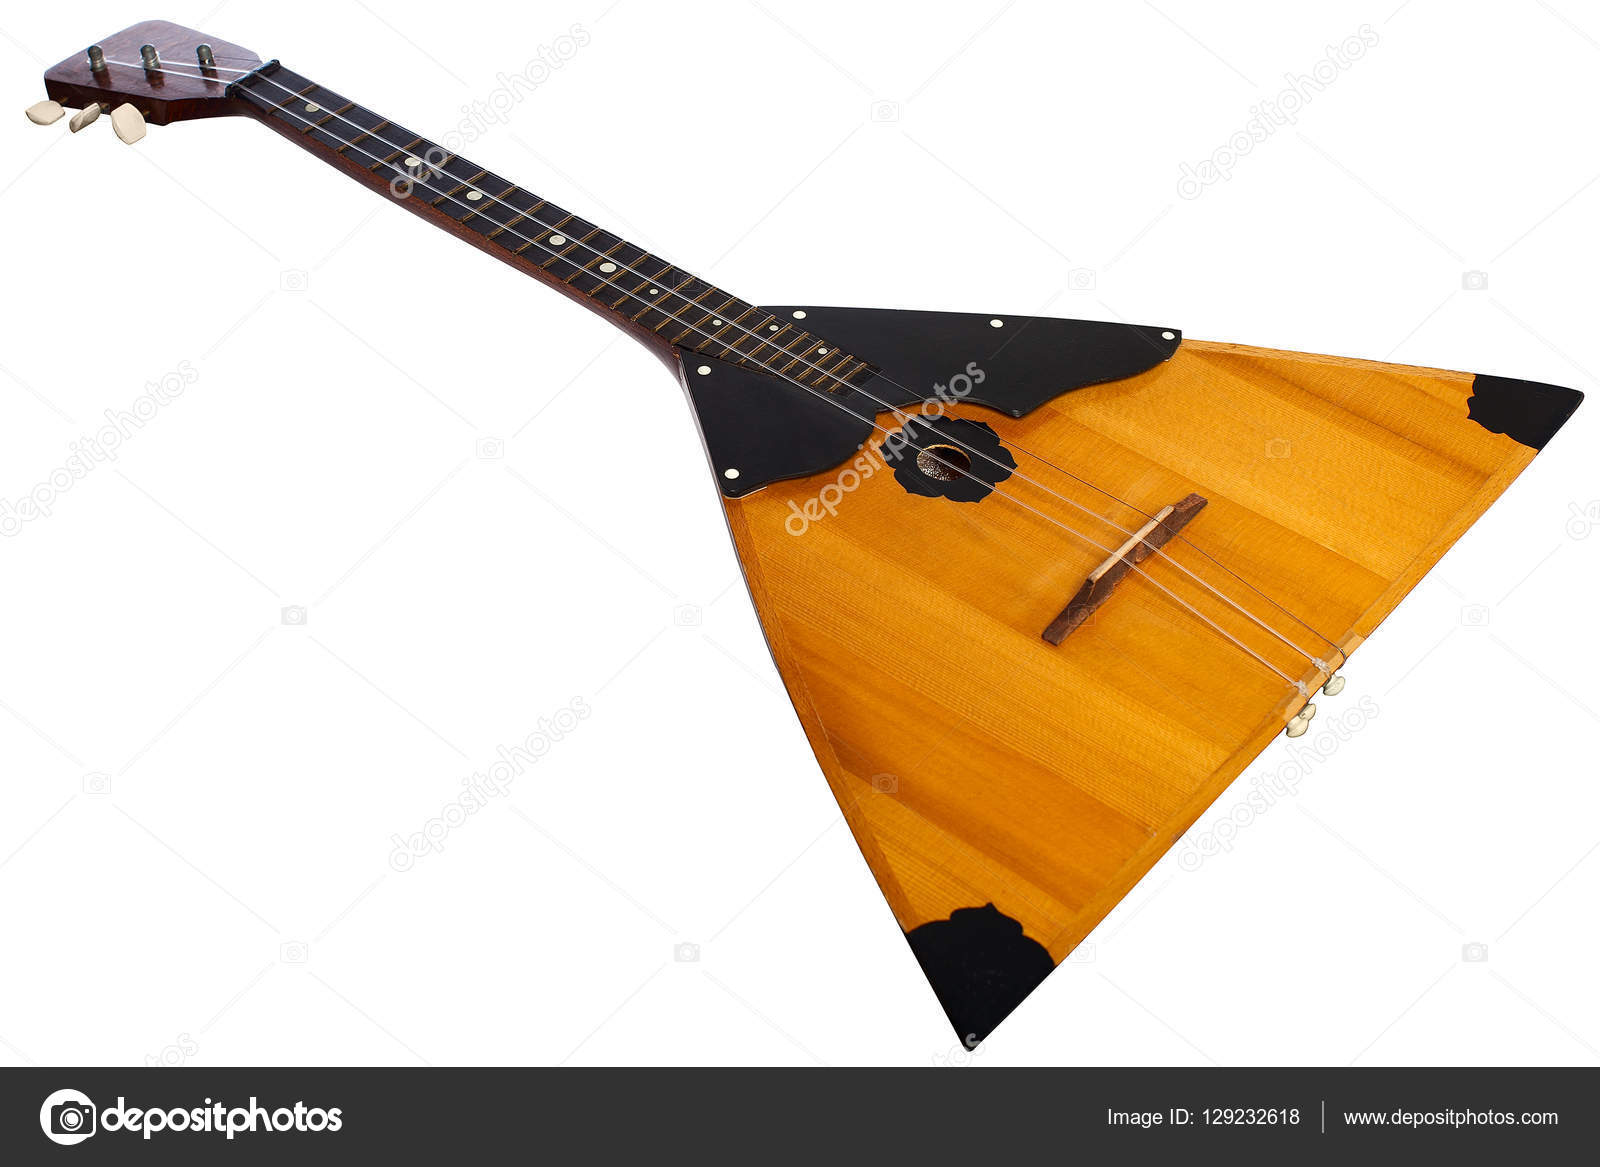 Anticuado Preceder Calor Balalaika musical instrument isolated on white background Stock Photo by  ©borisblik 129232618